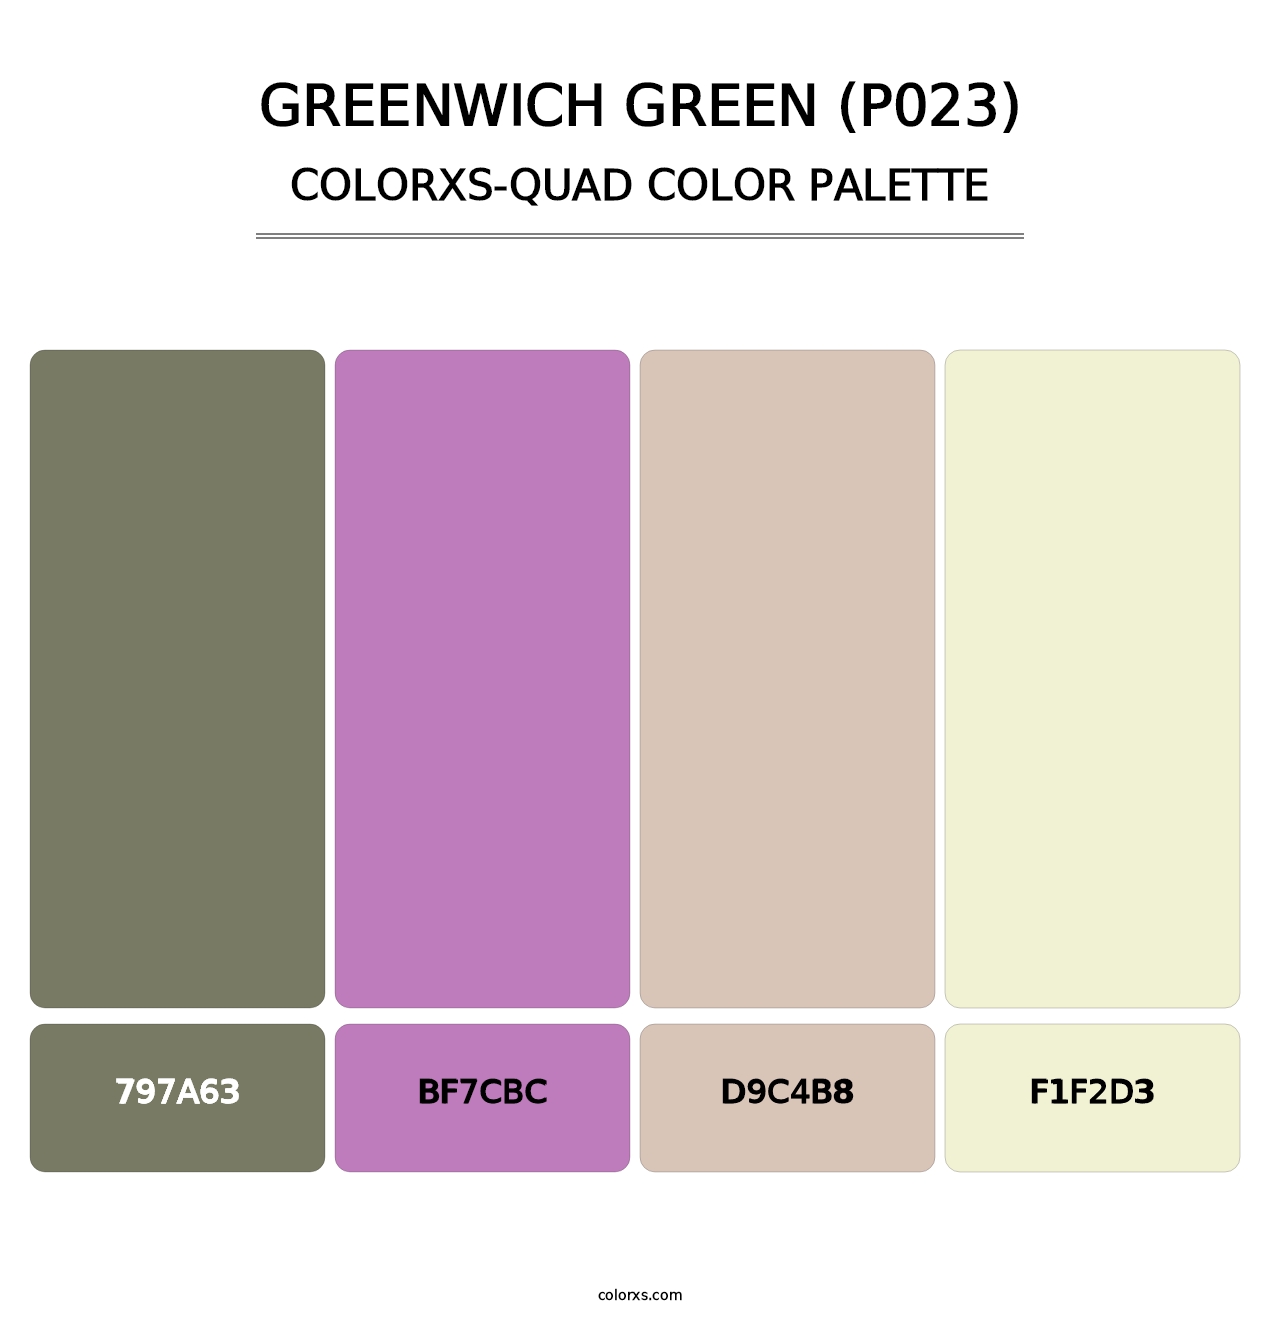 Greenwich Green (P023) - Colorxs Quad Palette